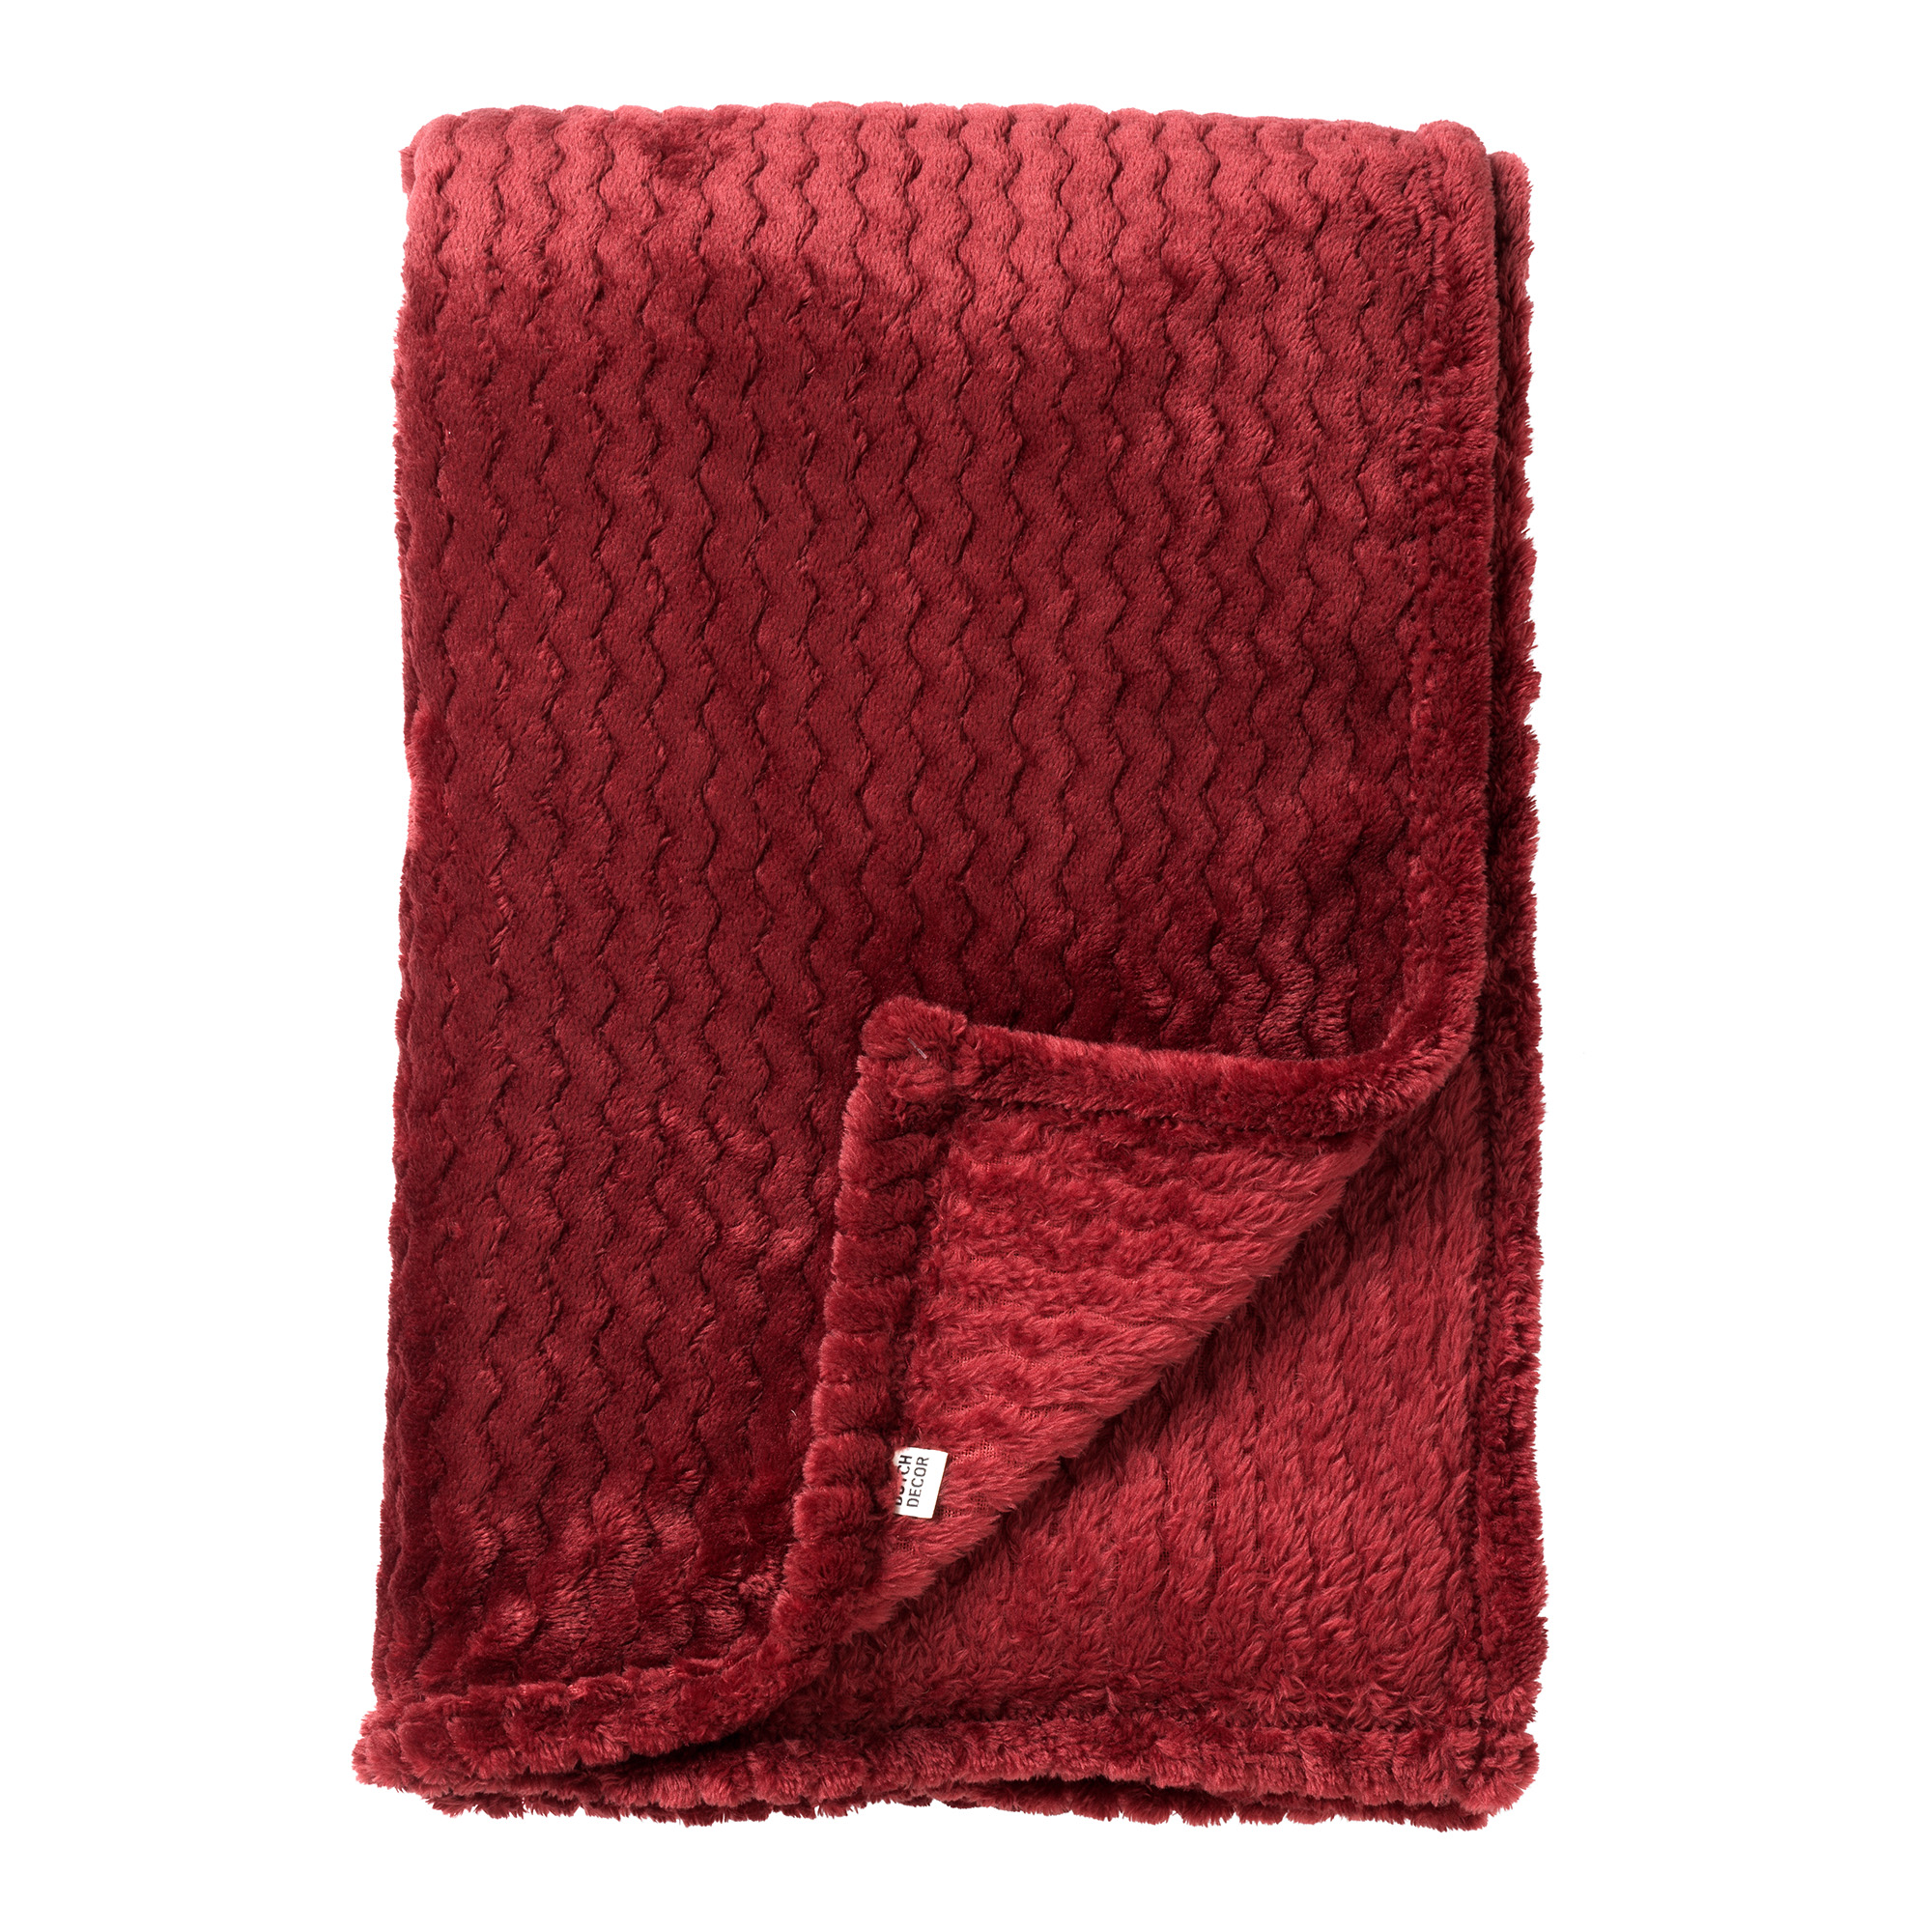 MARA - Plaid 150x200 cm - Merlot - rood - effen - zigzag patroon - sfeervol - superzacht